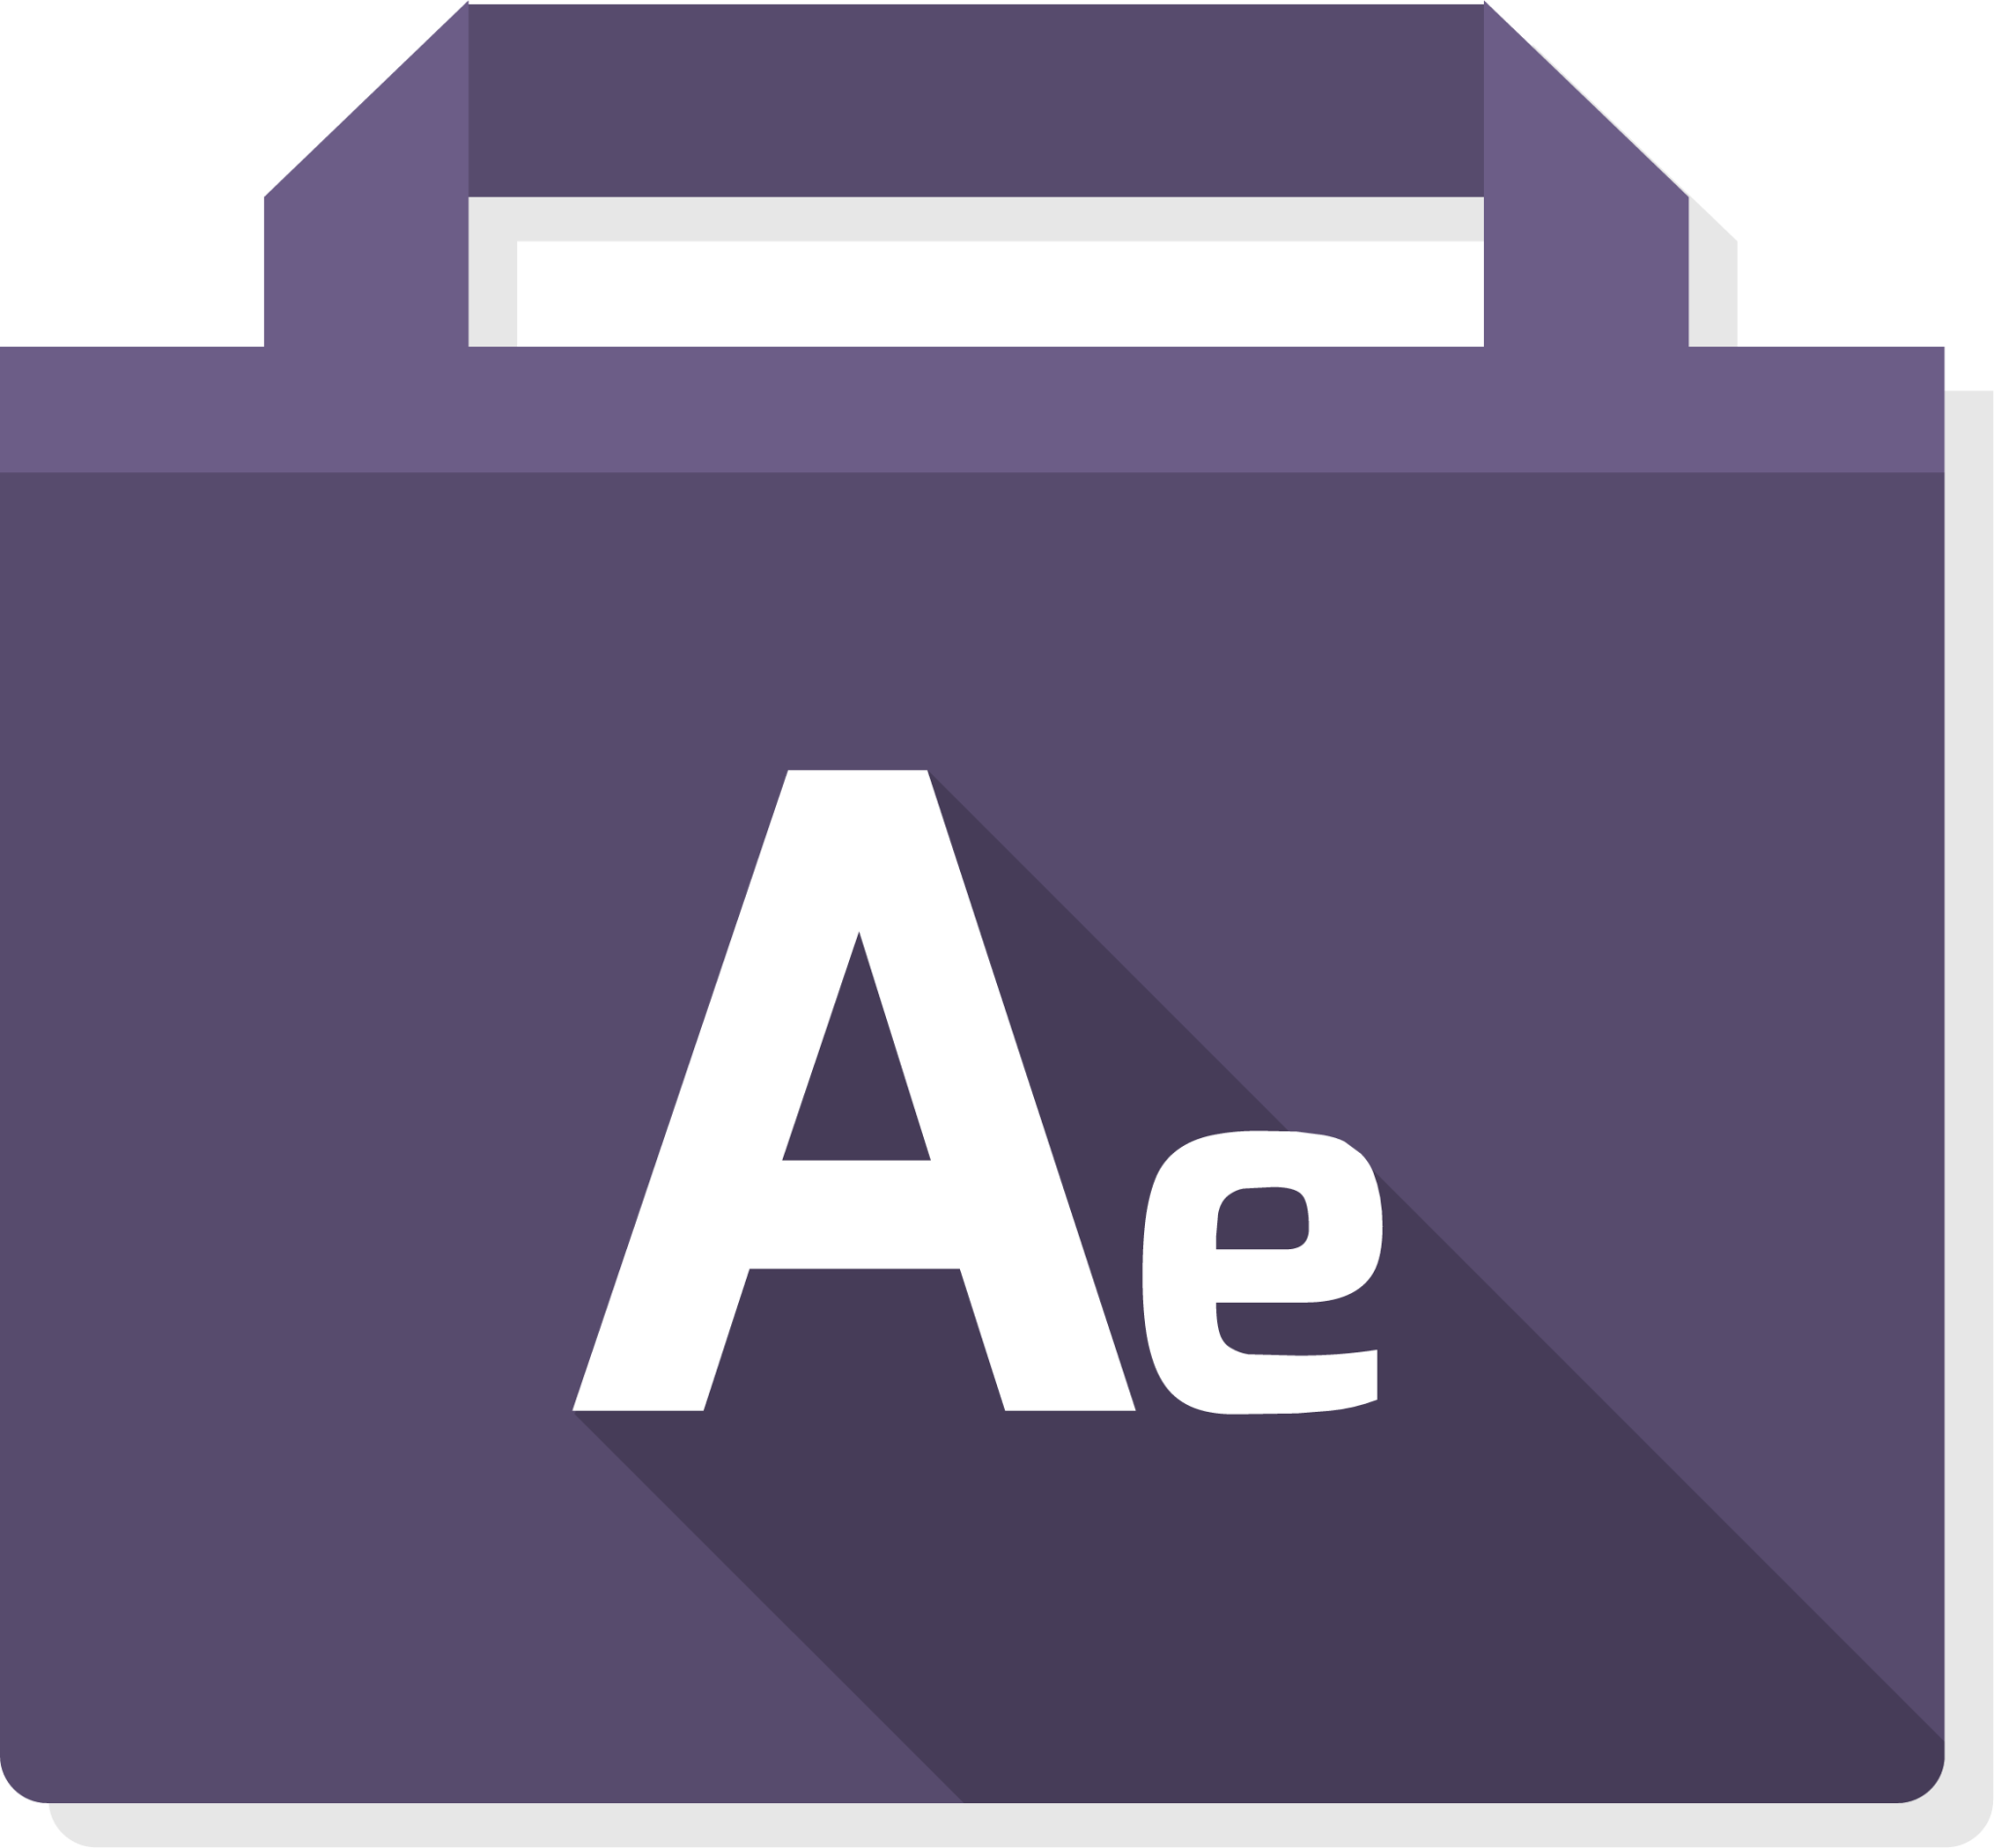 adobe folder icon